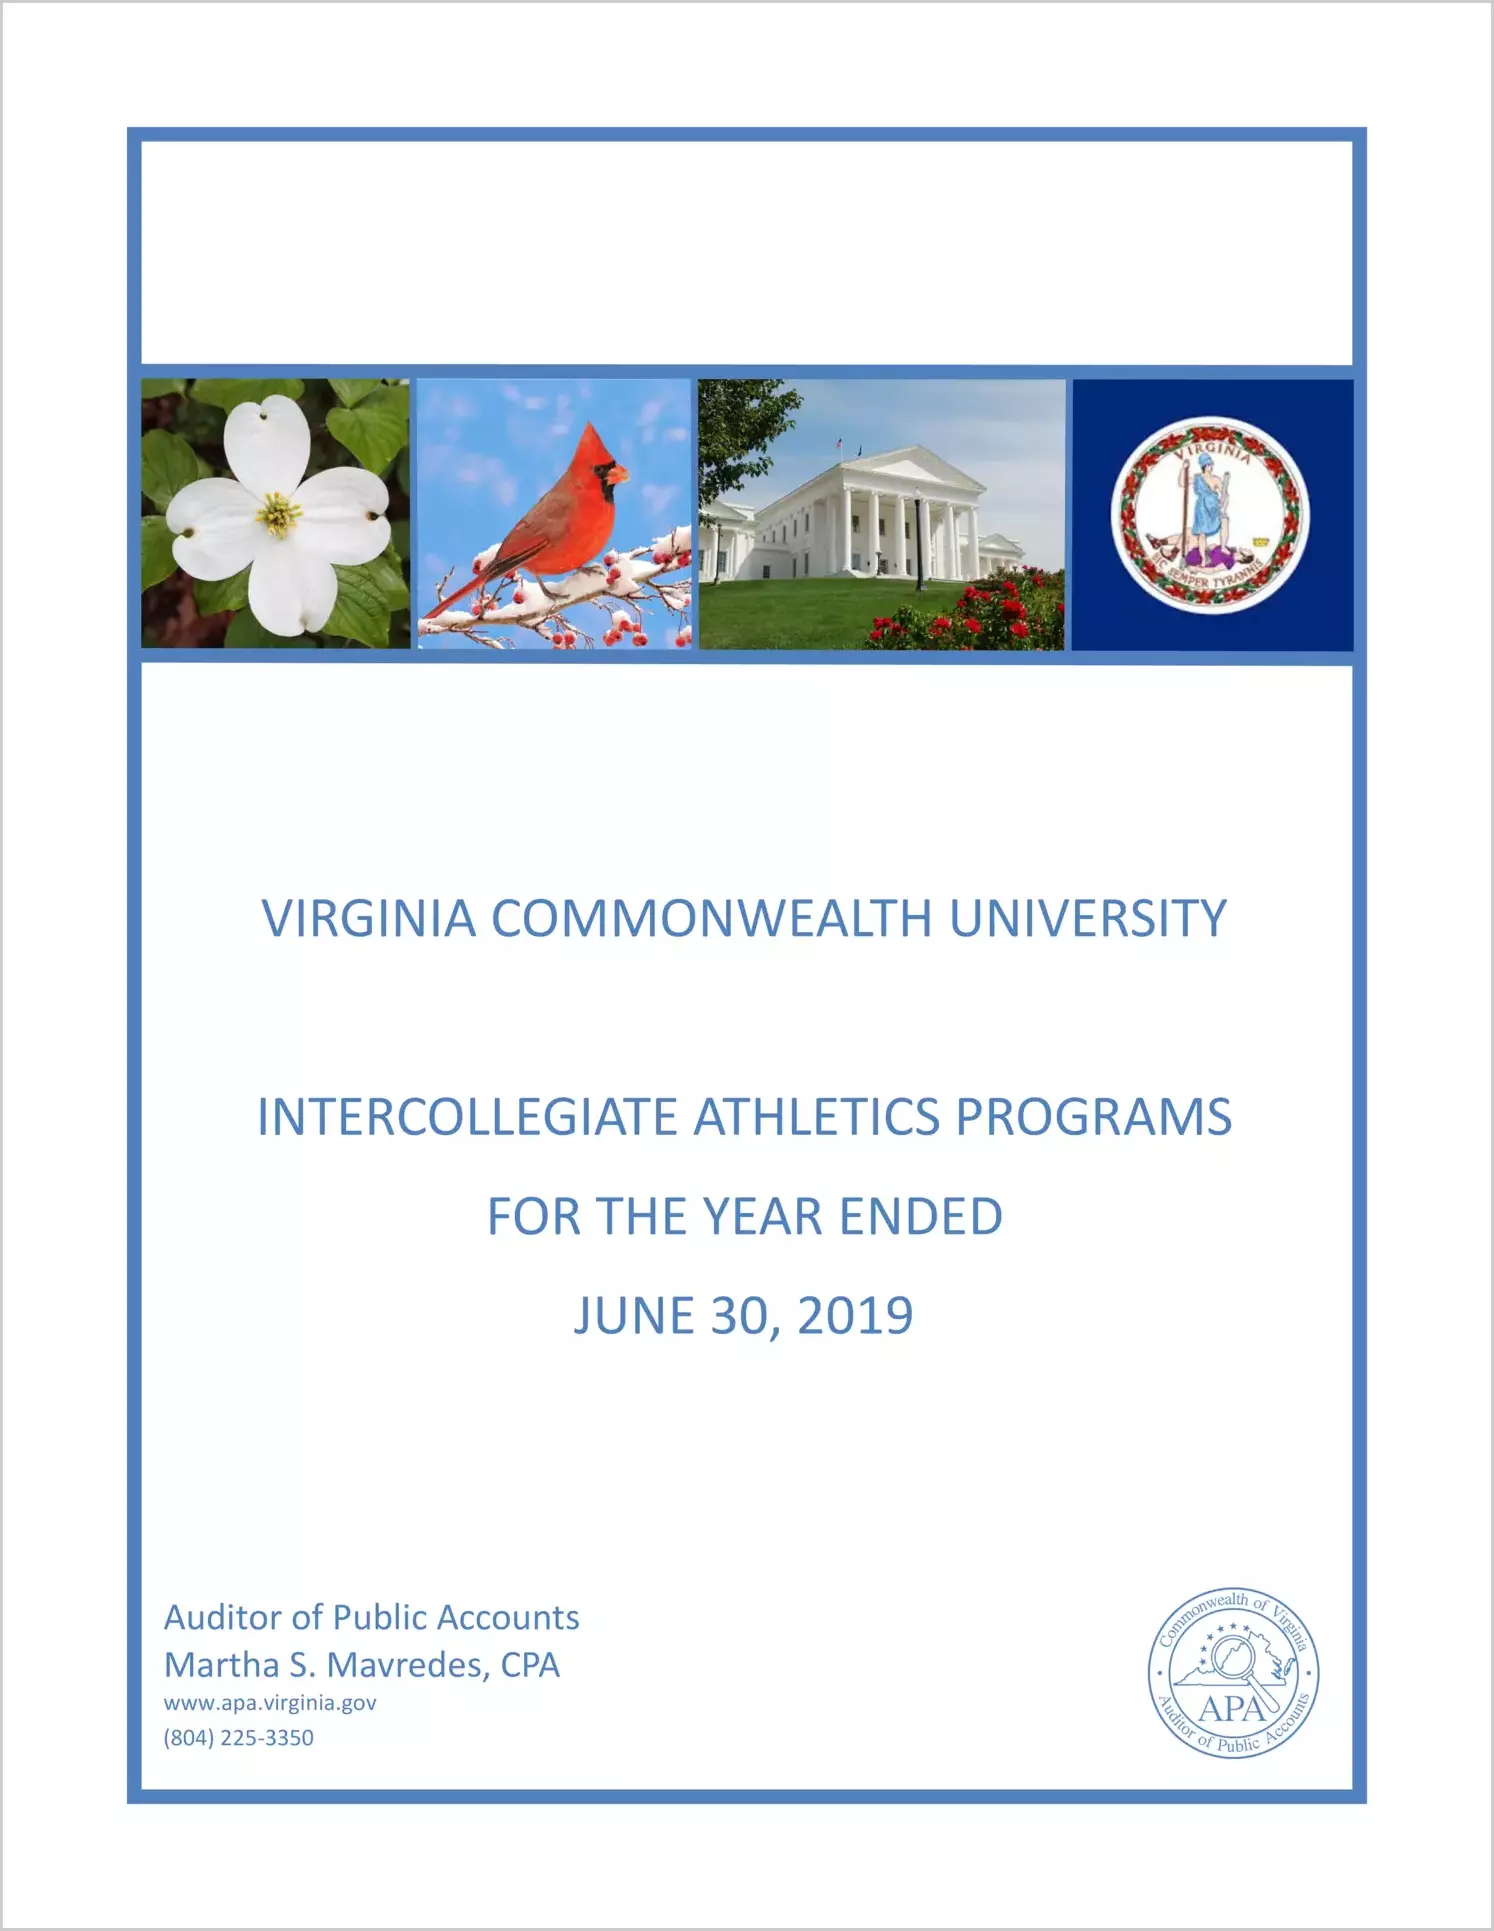 Virginia Commonwealth University Intercollegiate Athletics Programs for the year ended June 30, 2019